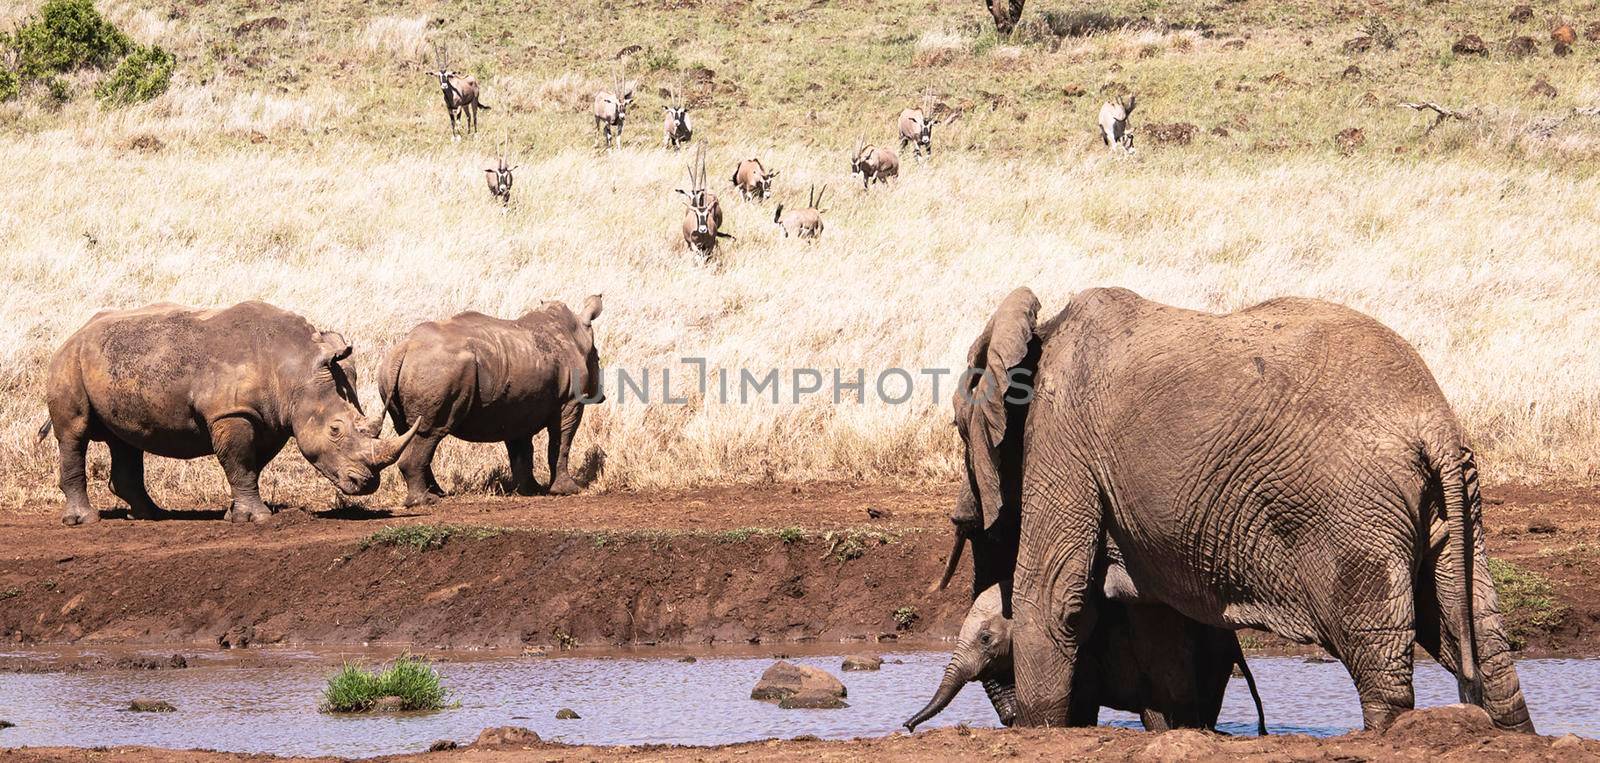 Beautiful Laikipia ,Kenya wildlife  Pictures